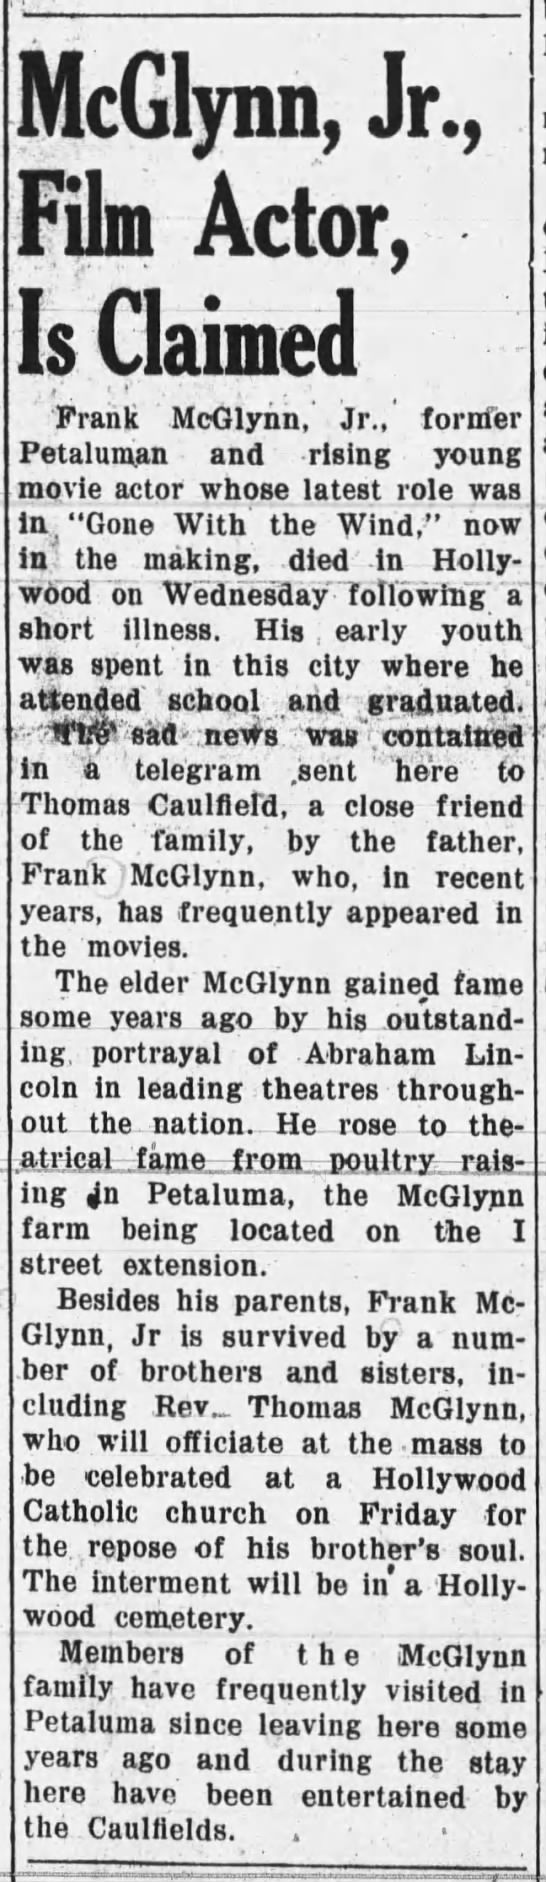 March, 1939 death notice for movie actor Frank McGlynn, Jr. - 